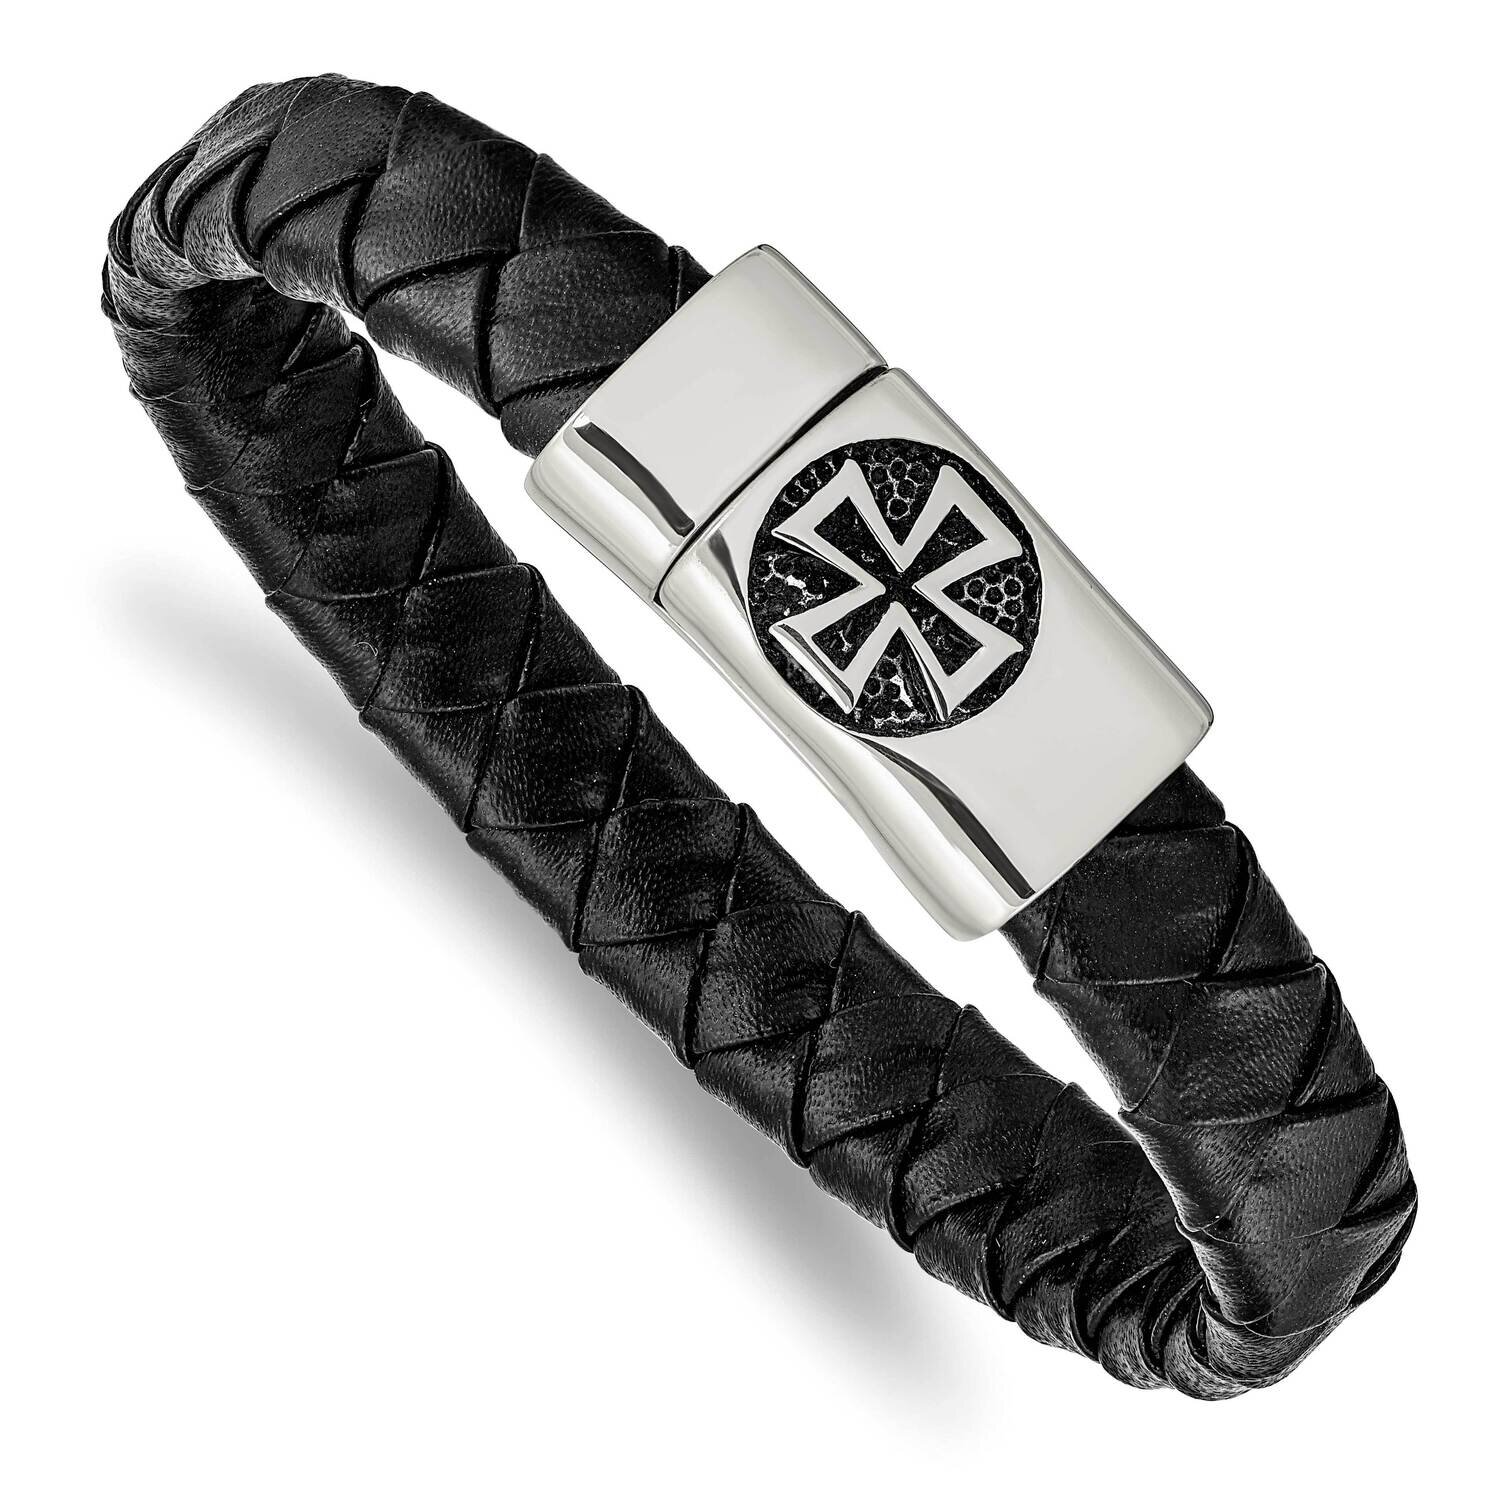 Polished Cross Black Leather 8.5 Inch Bracelet Stainless Steel Antiqued SRB2449-8.5